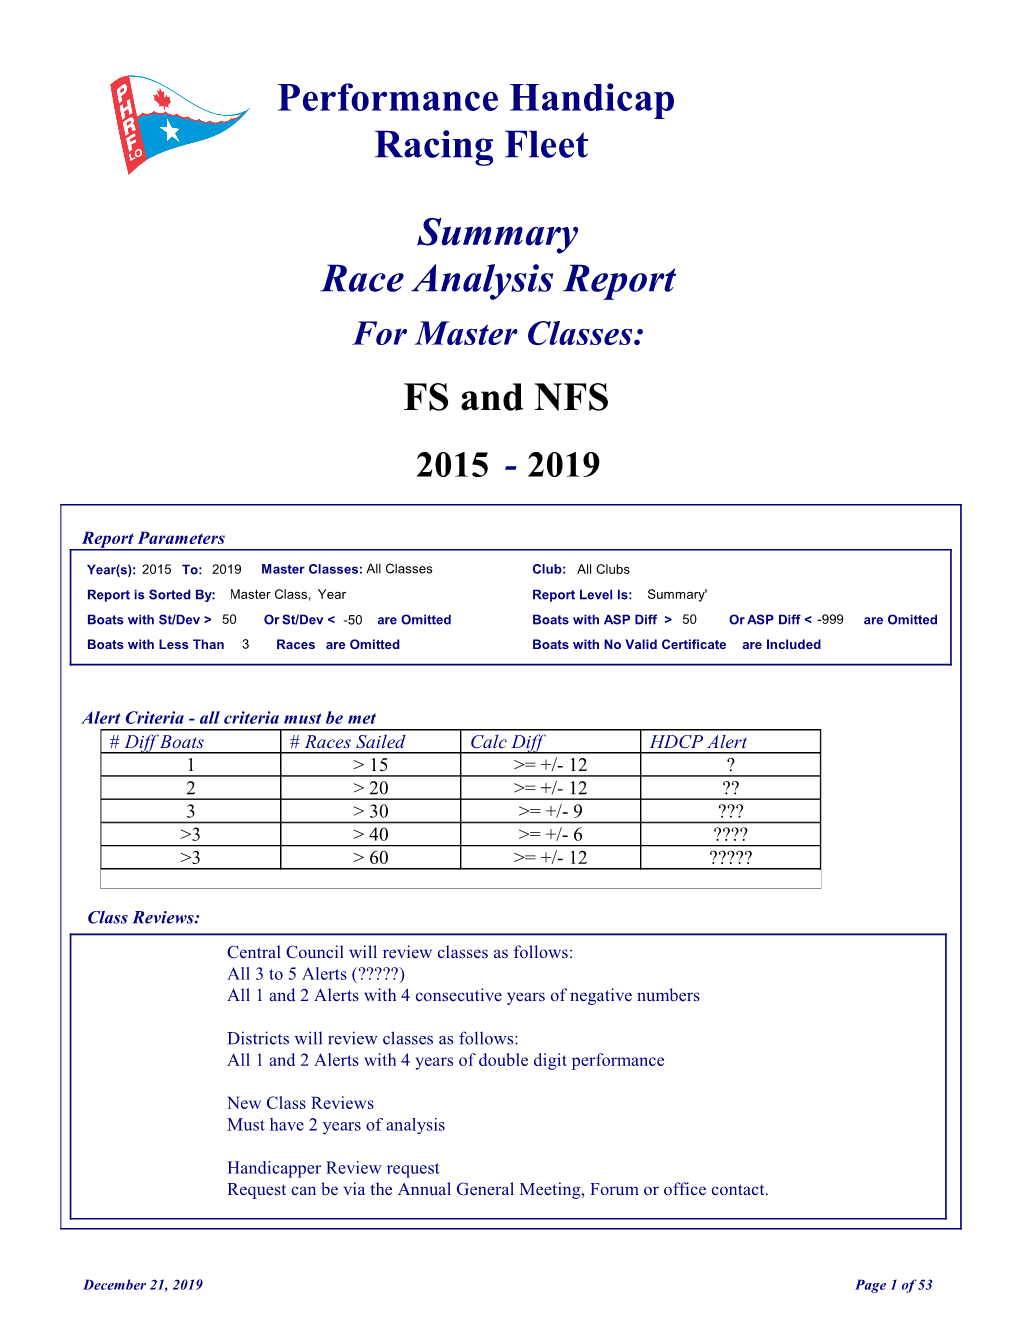 Race Analysis Summary Report